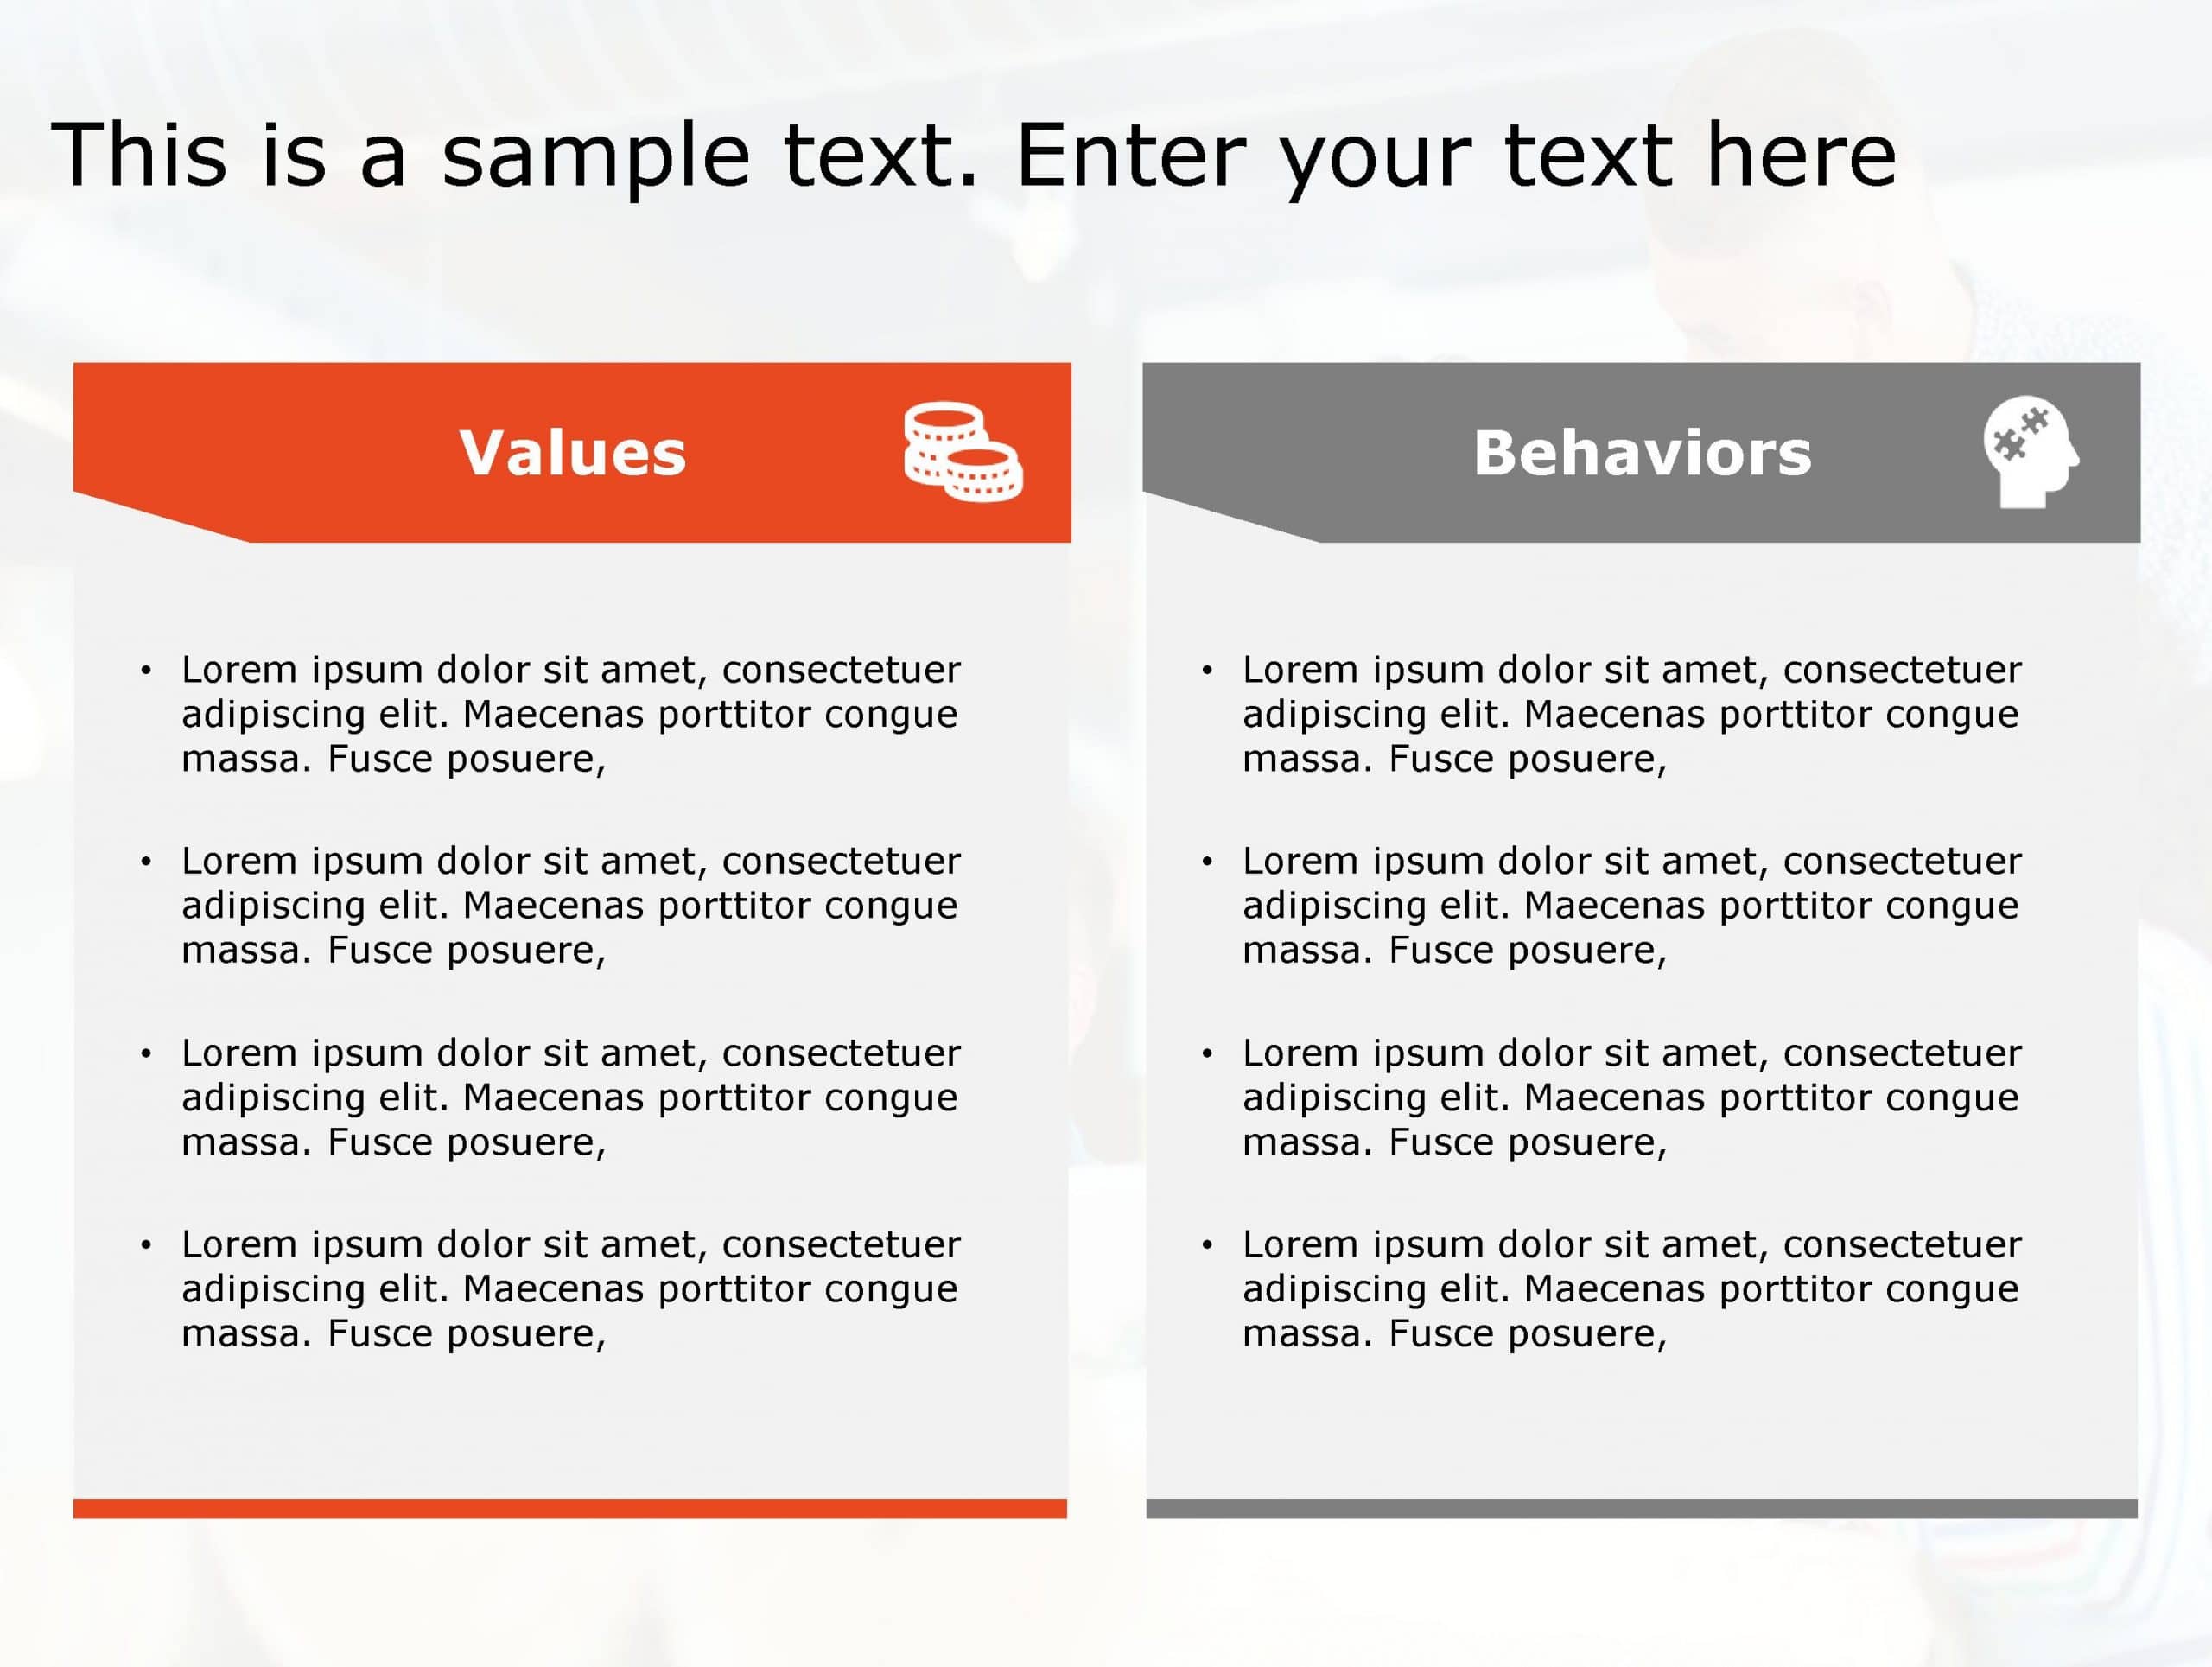 Values Behaviours 184 PowerPoint Template